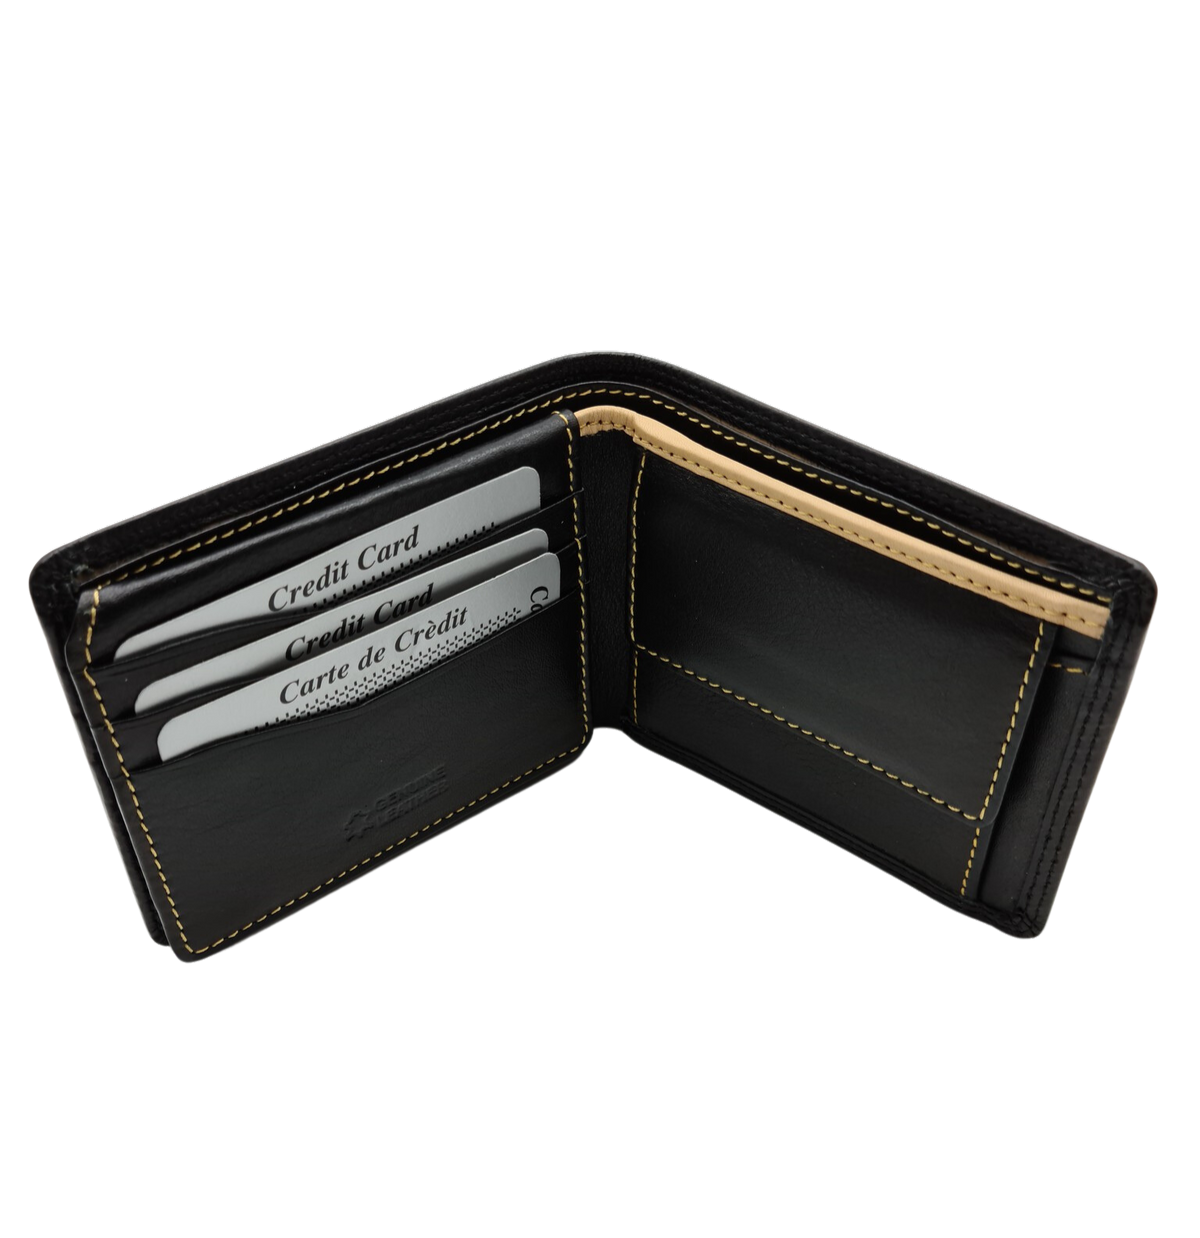 Migant Design men leather wallet 1351 - Migant